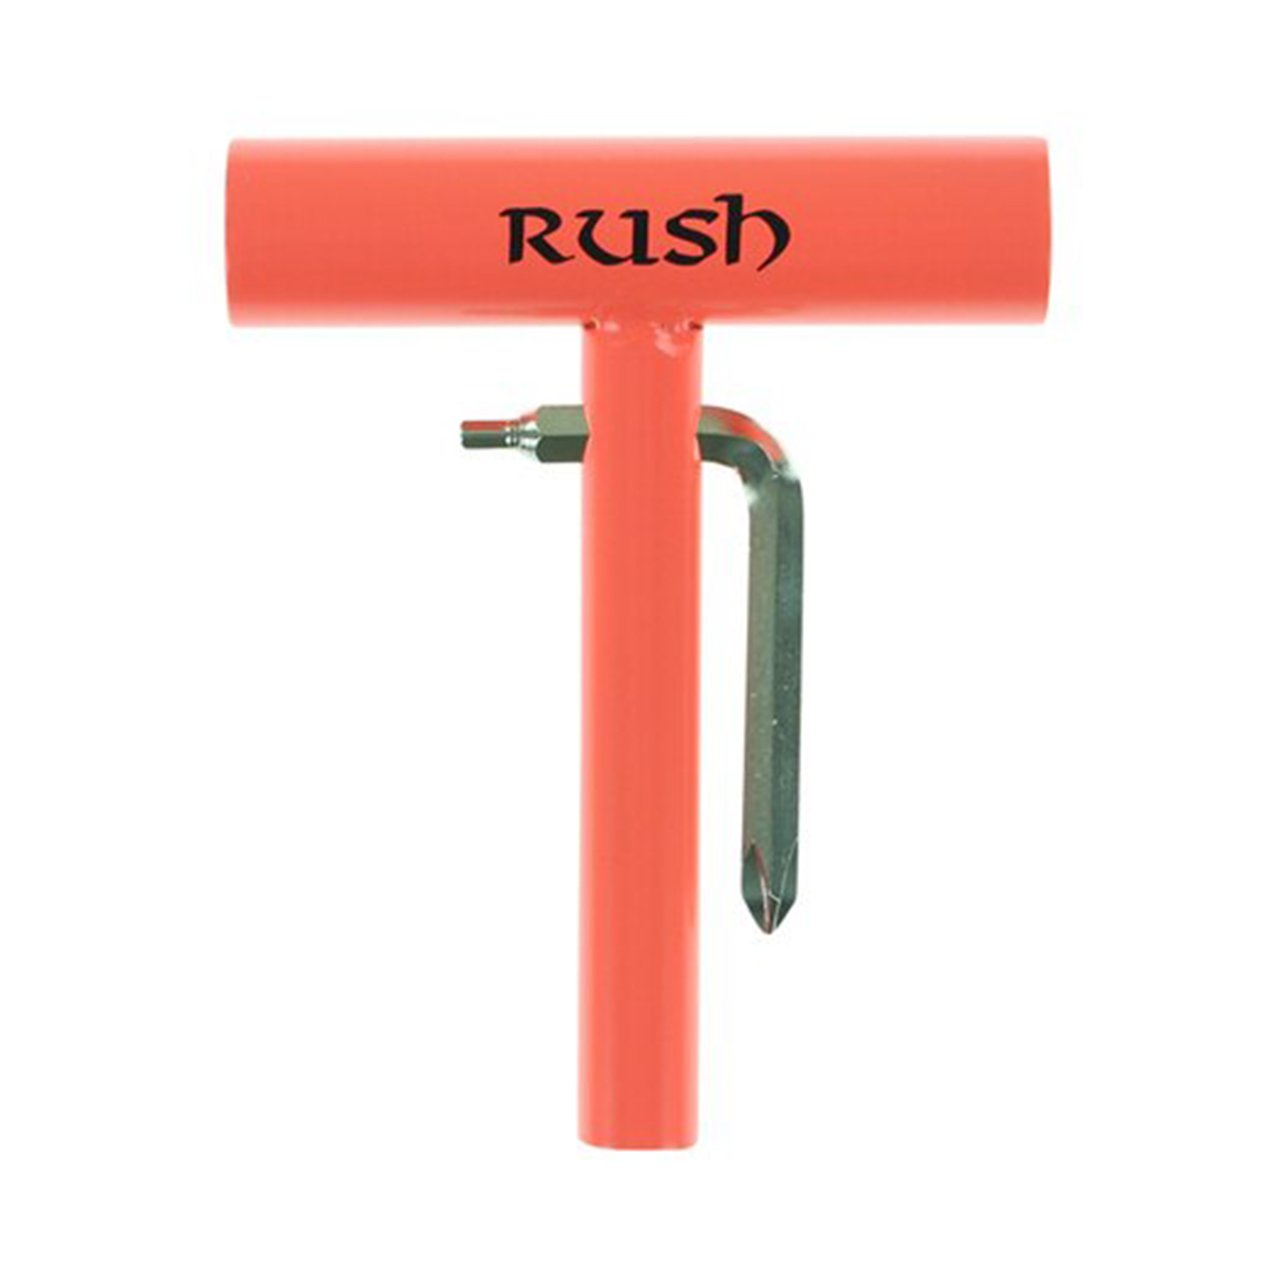 Rush Skate Tool Orange